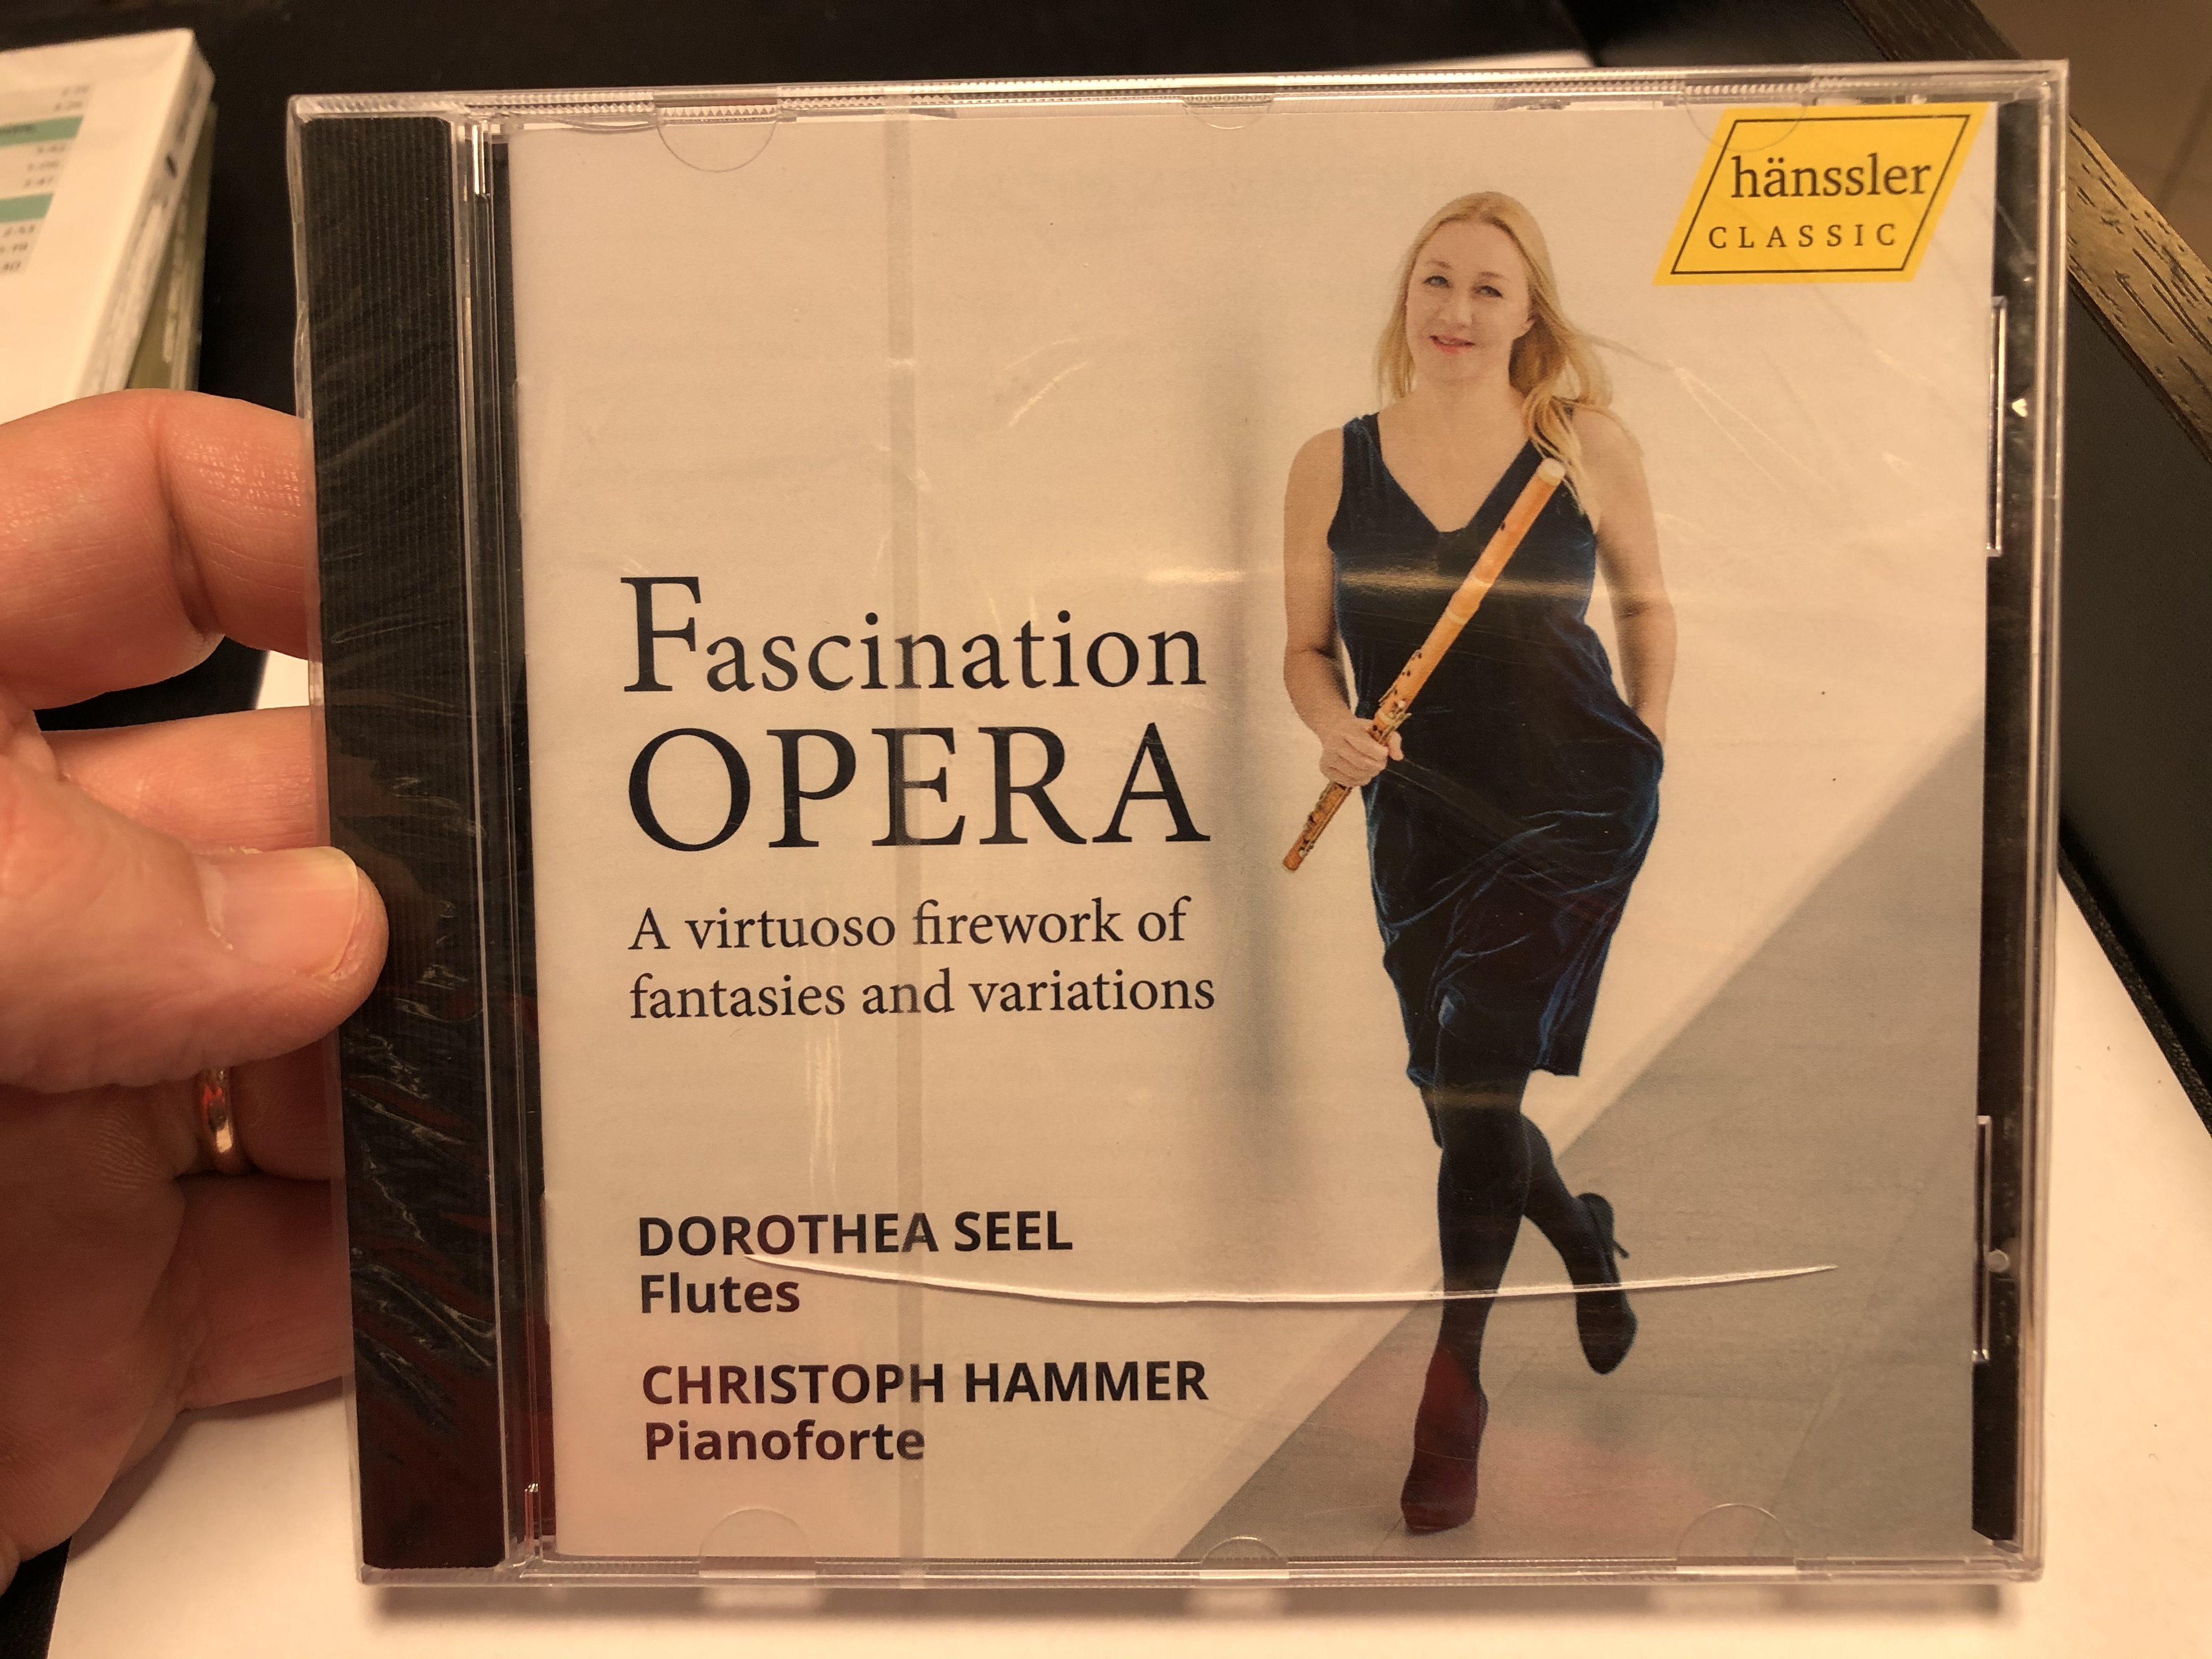 fascination-opera-a-virtuoso-firework-of-fantasies-and-variations-dorothea-seel-flutes-christoph-hammer-pianoforte-hanssler-classic-audio-cd-2020-cd-hc19077-1-.jpg